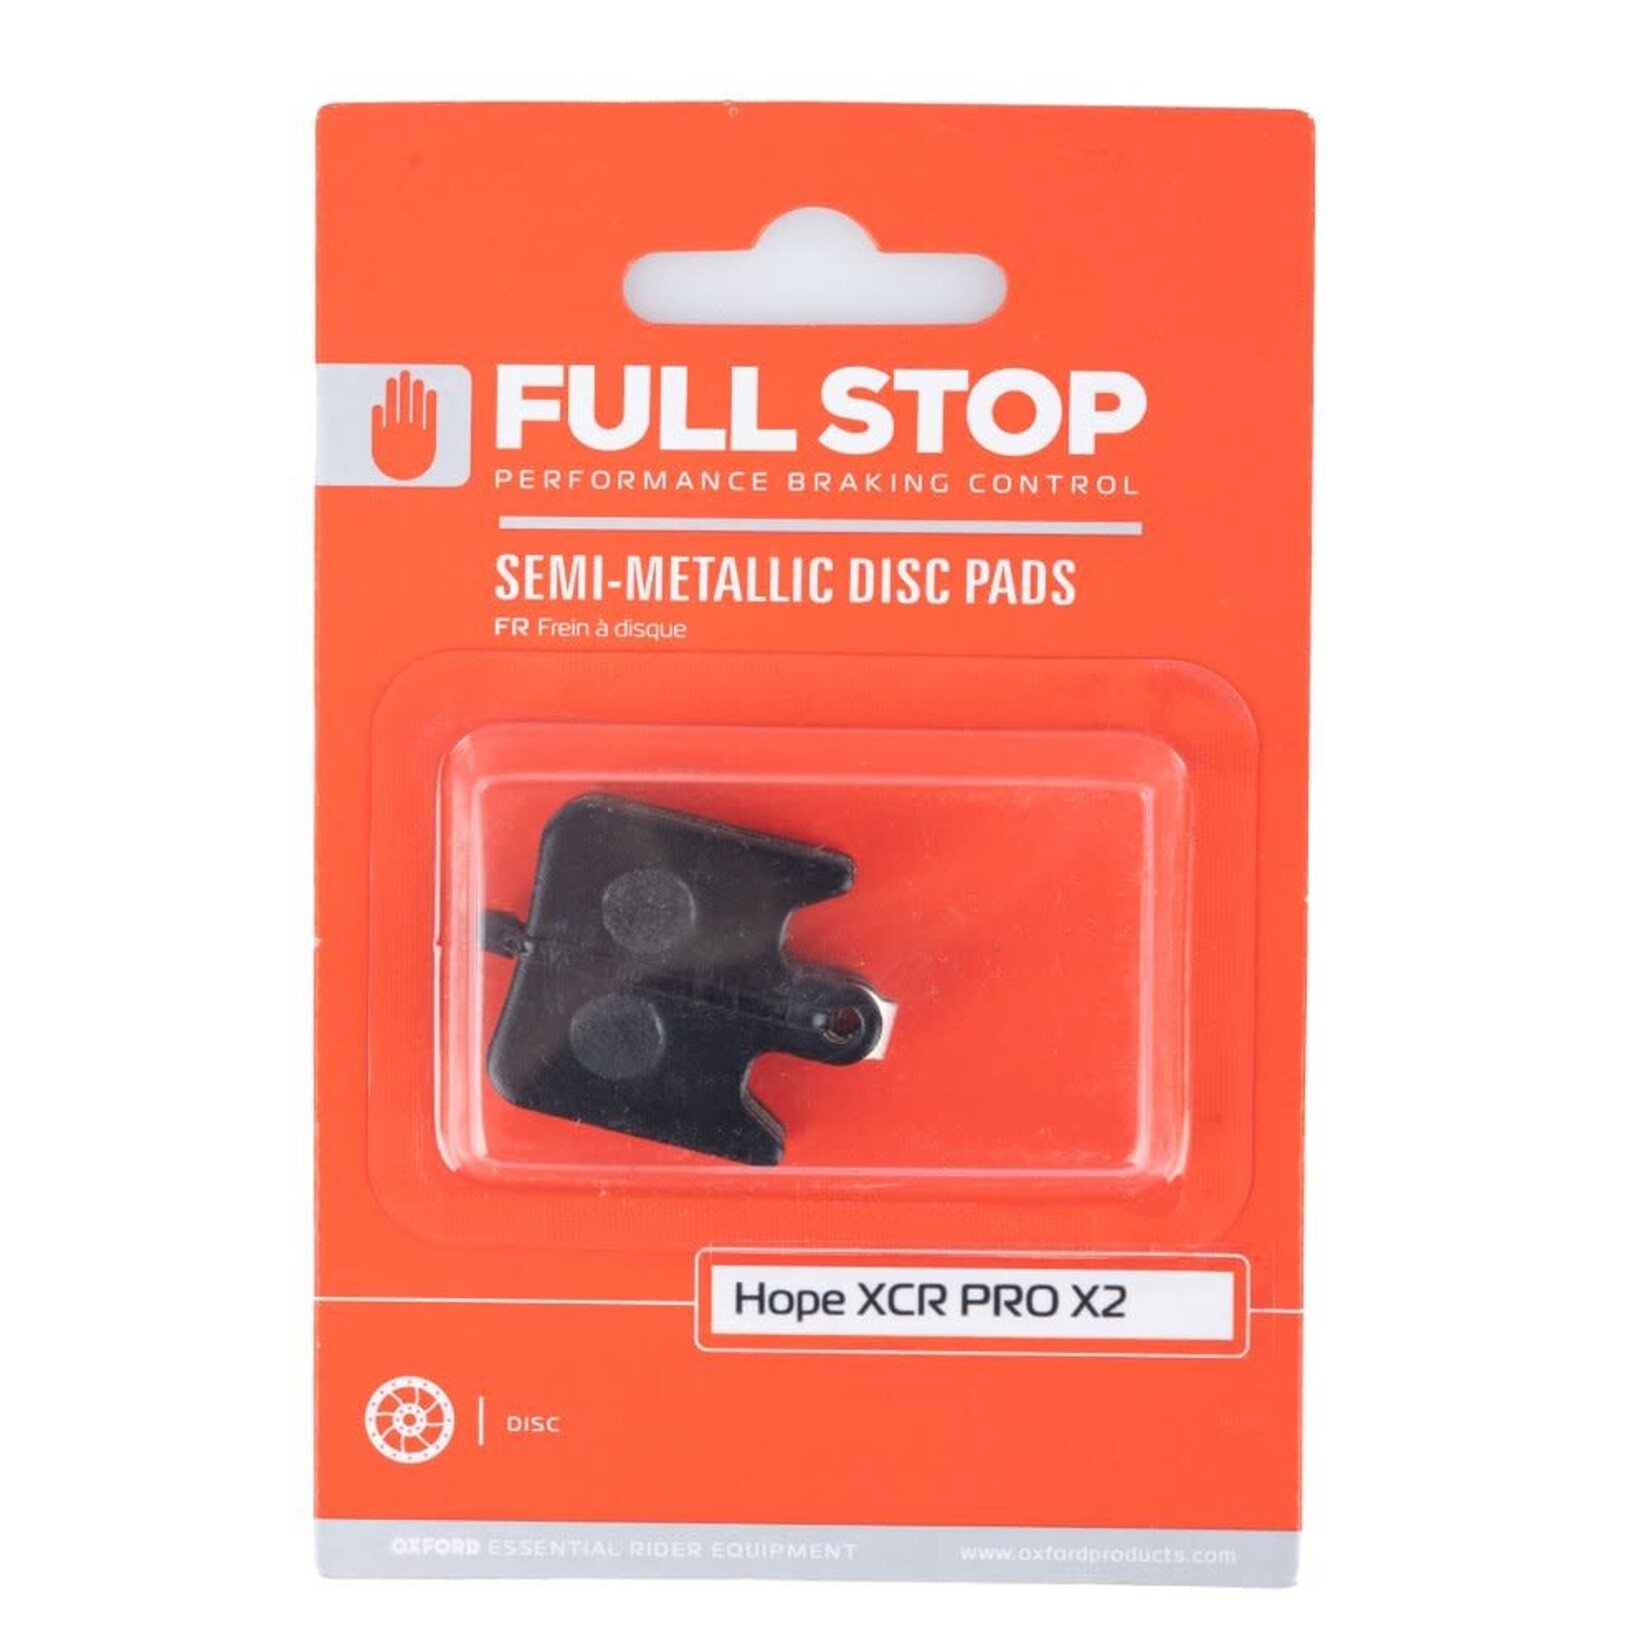 fullstop Fullstop Hope XCR Pro X2 Semi-Metallic Disc Pads